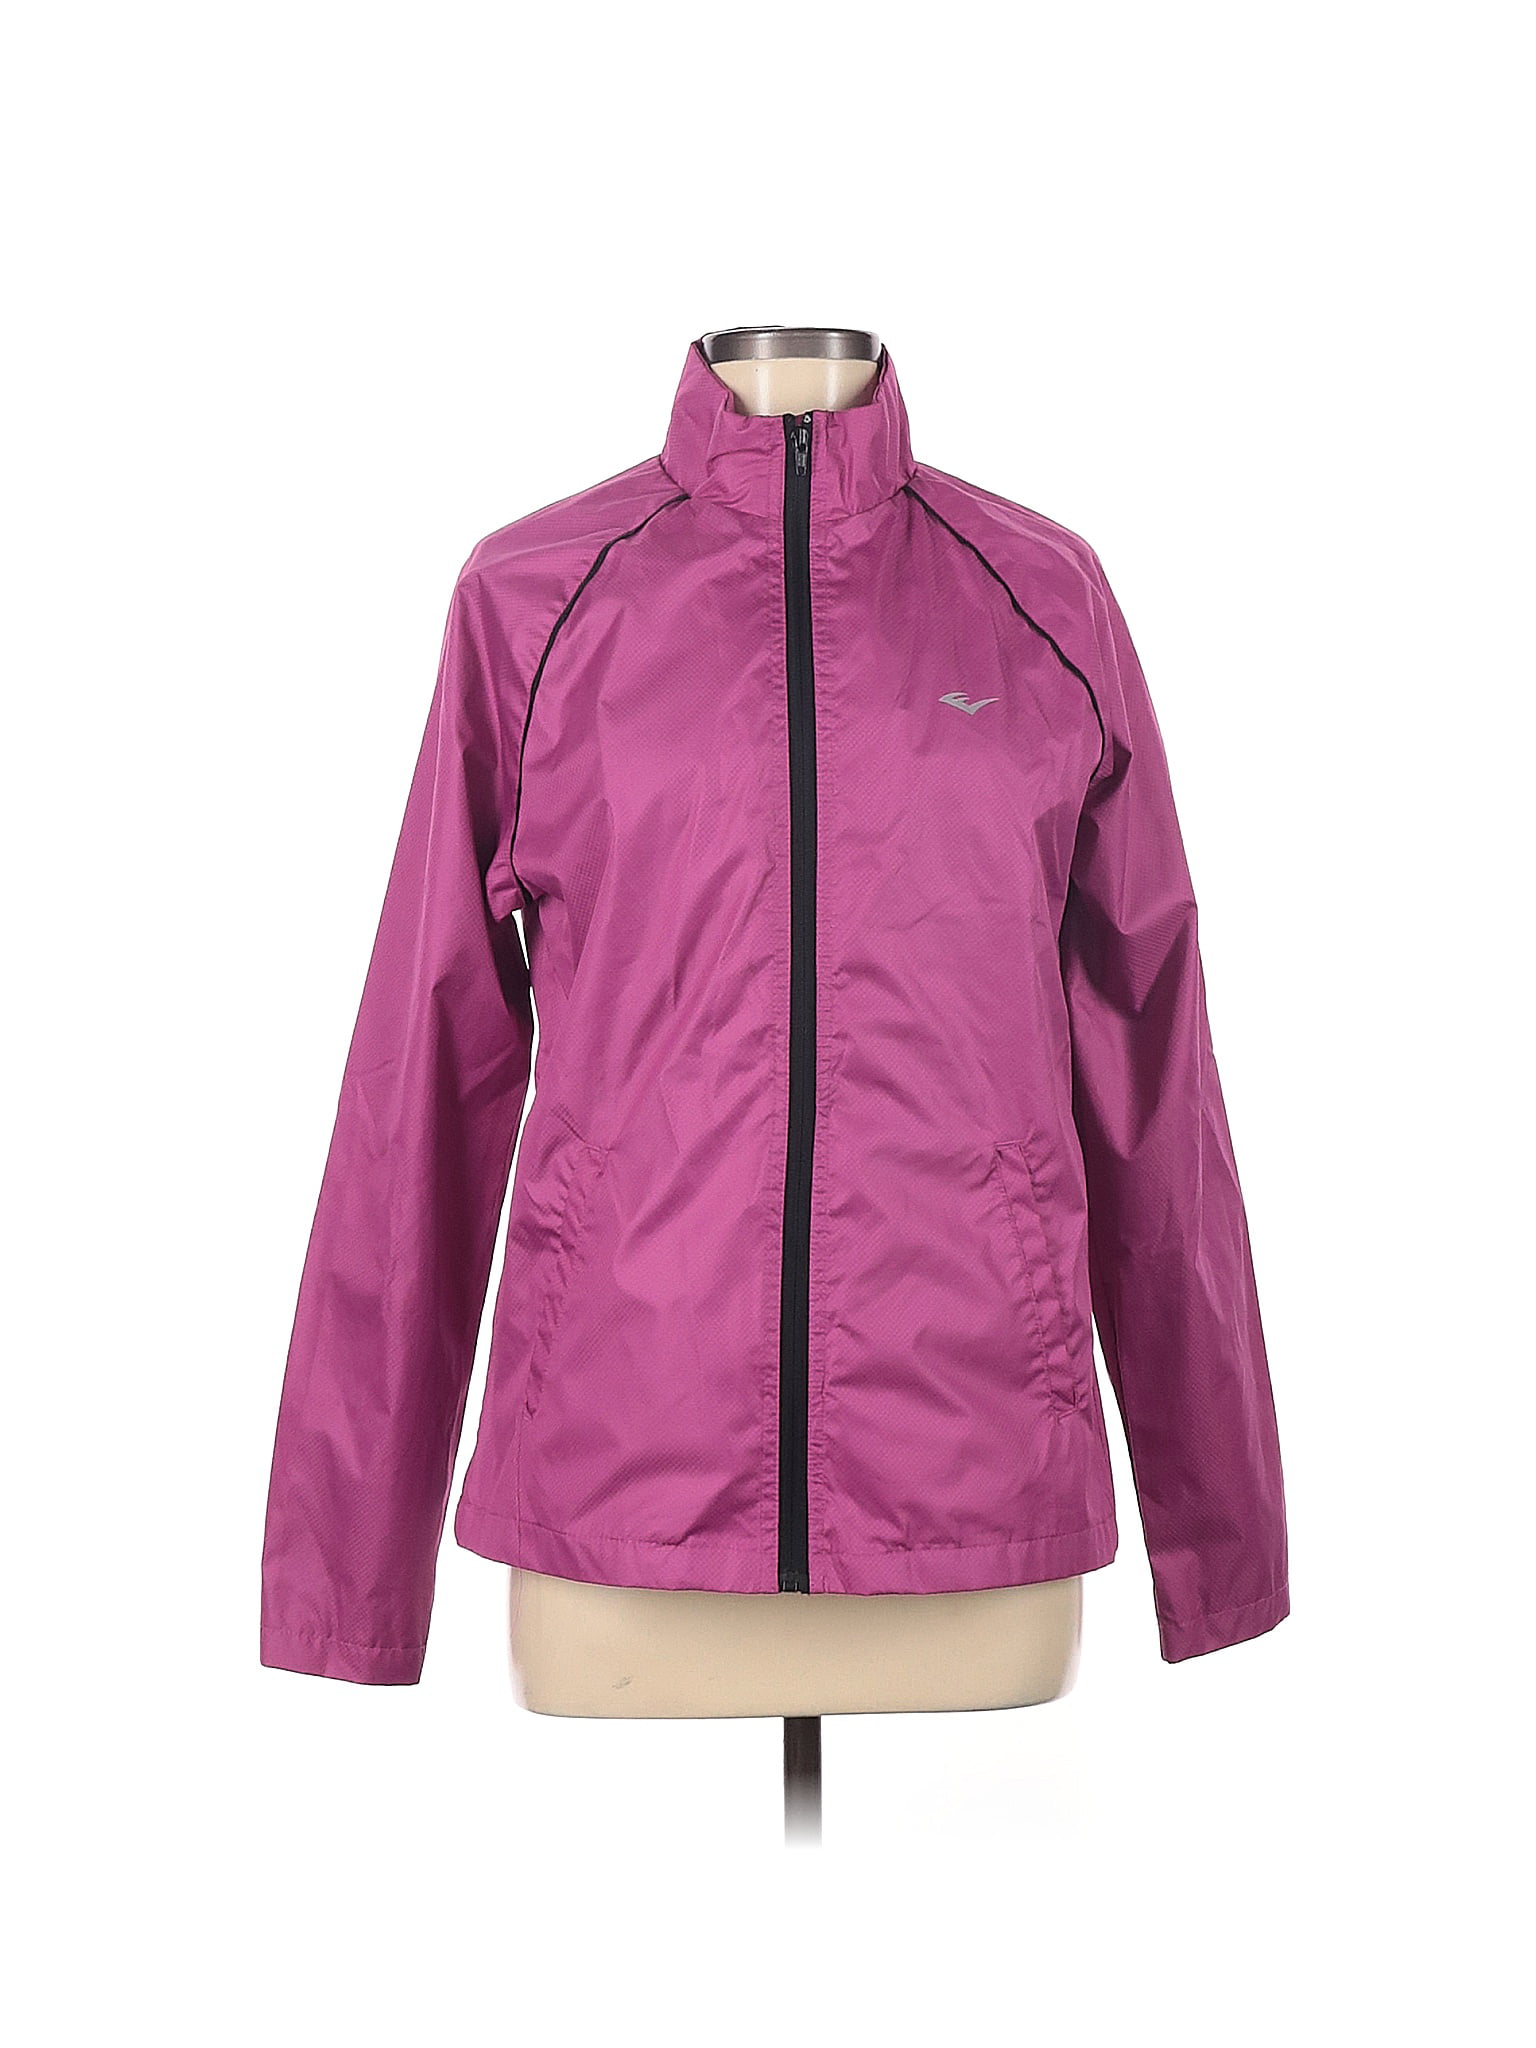 Everlast Hooded Windbreaker Jacket Light Running Rain Coat Size  Womens